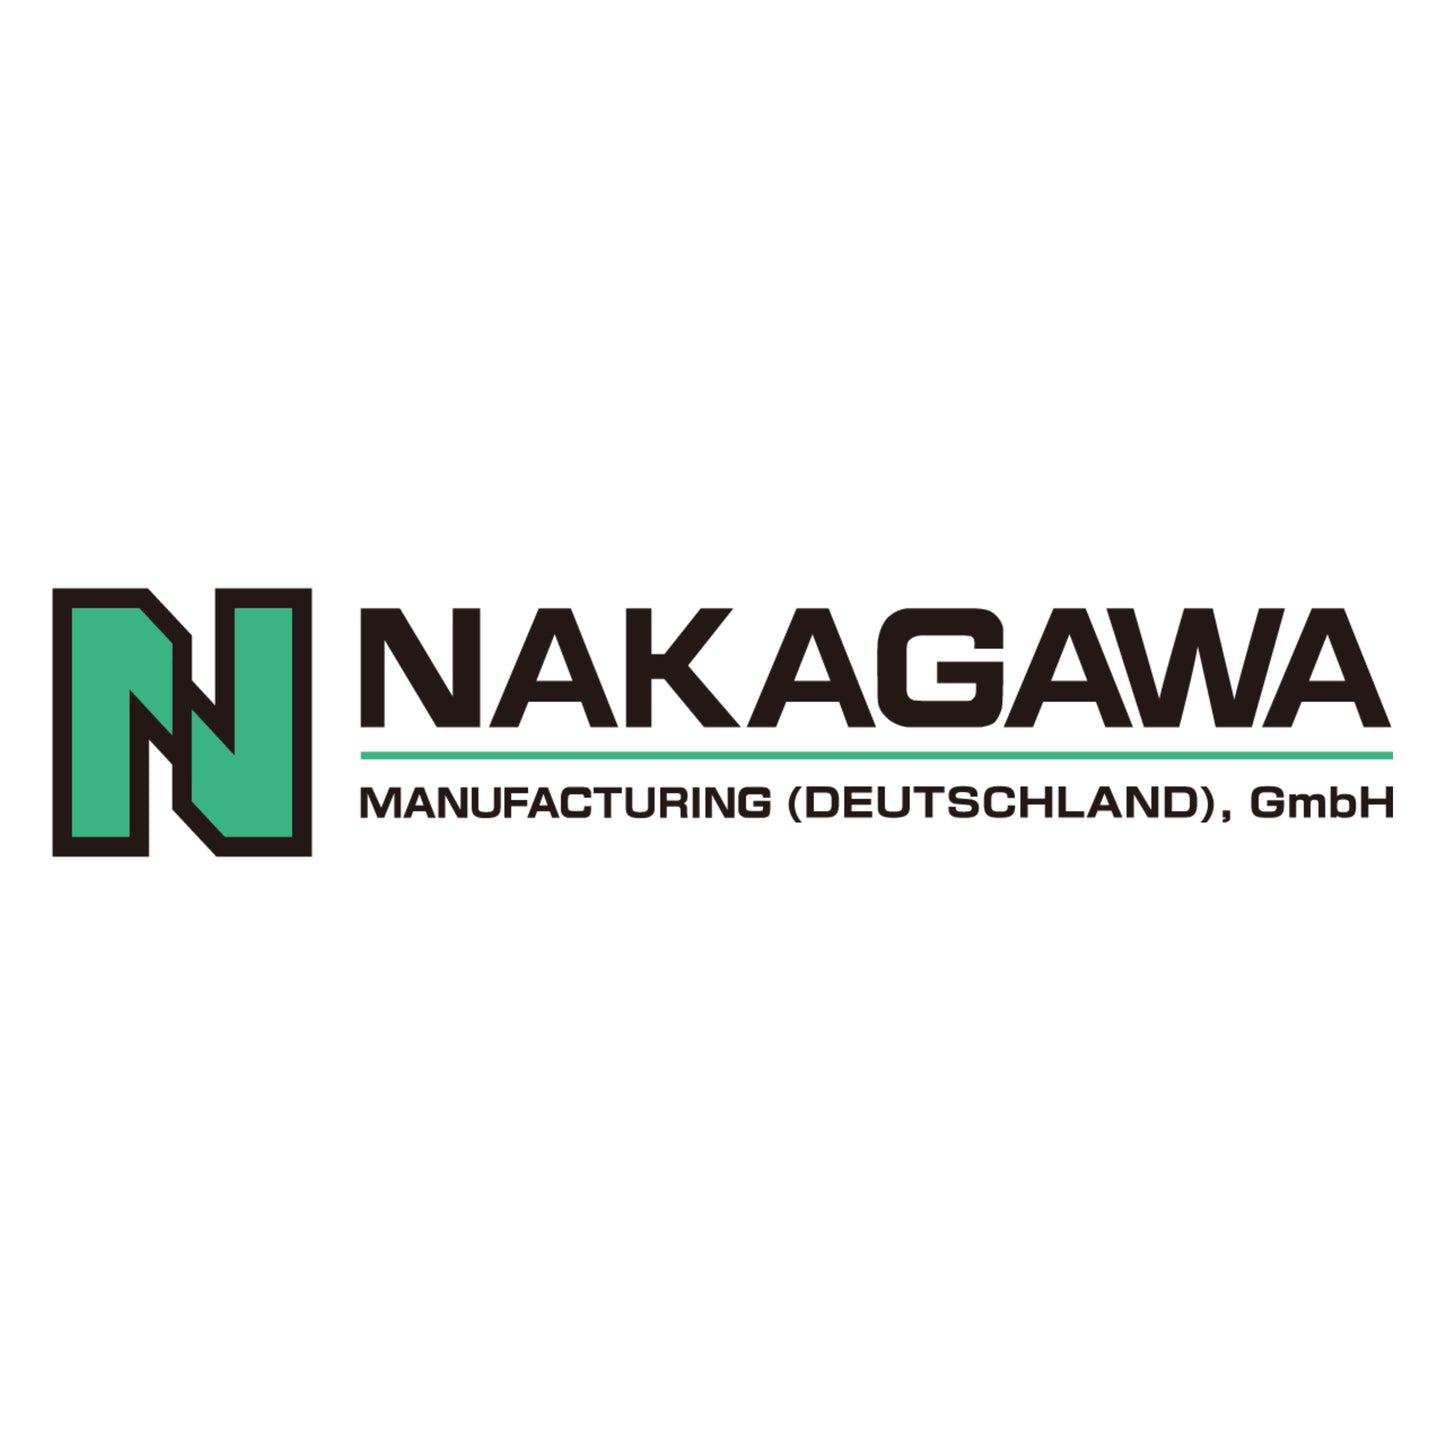 Nakagawa - Schwarzes Papier - Vollmaterial 130mm - Toner / LED / Laser